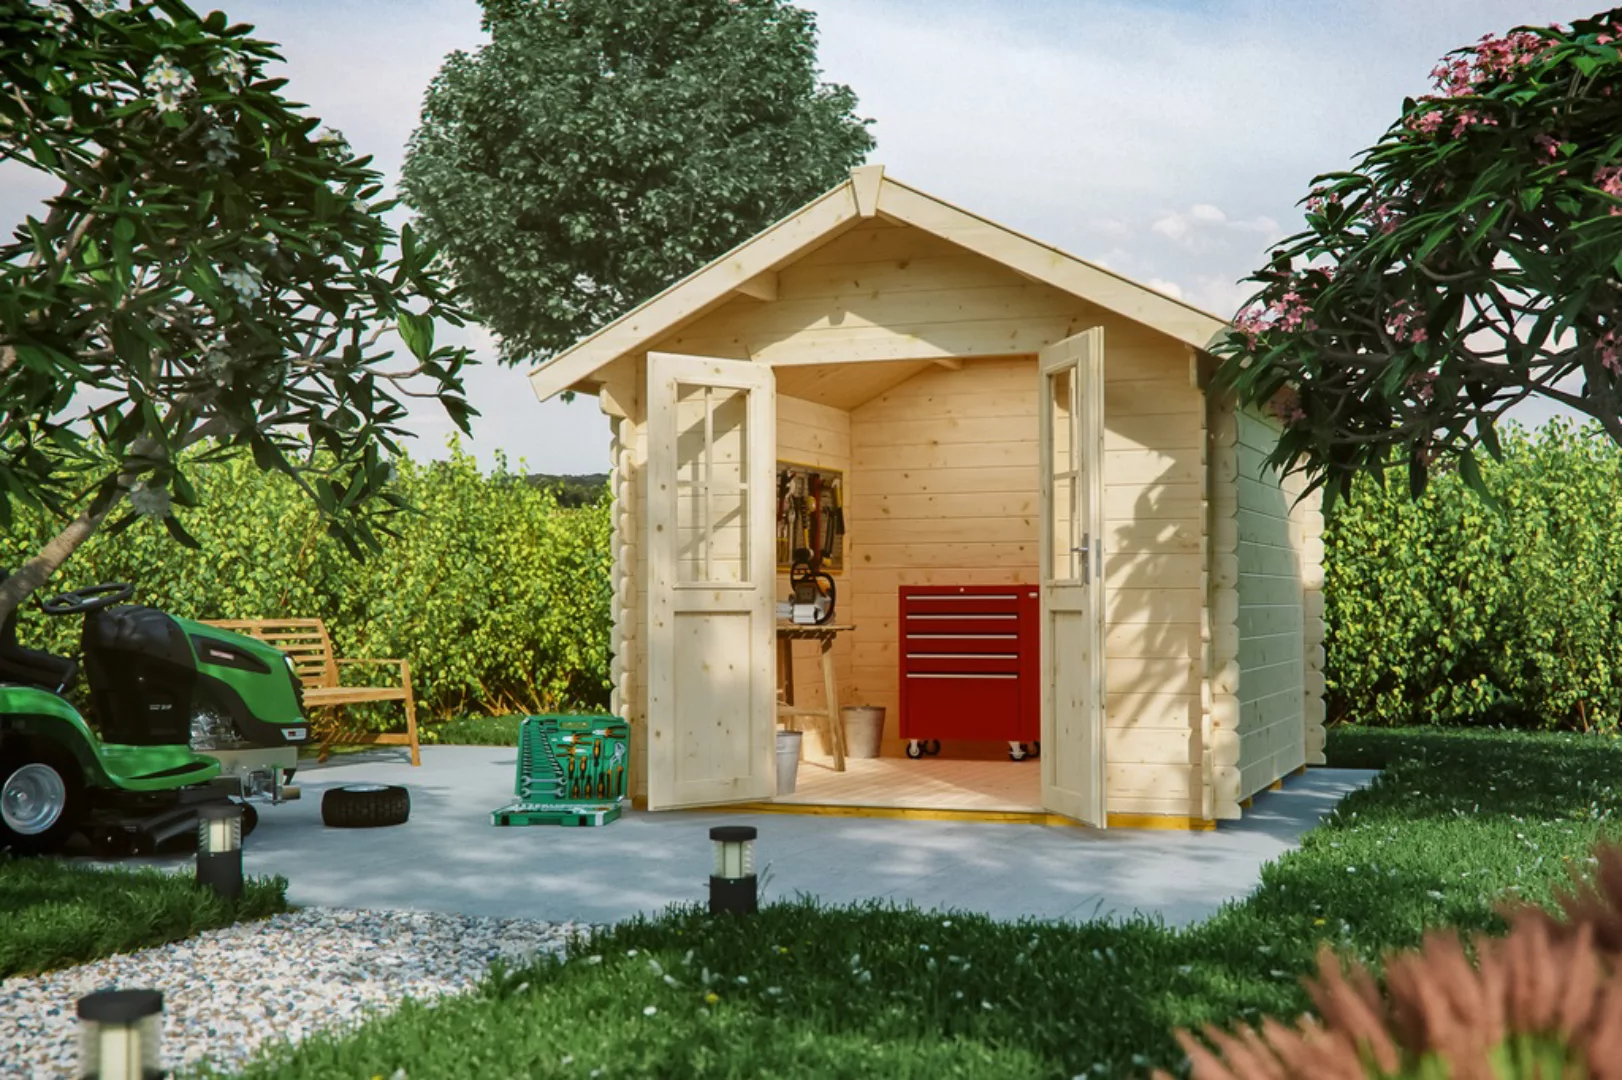 Skan Holz Holz-Gartenhaus Palma 2 Natur 250 cm x 250 cm günstig online kaufen